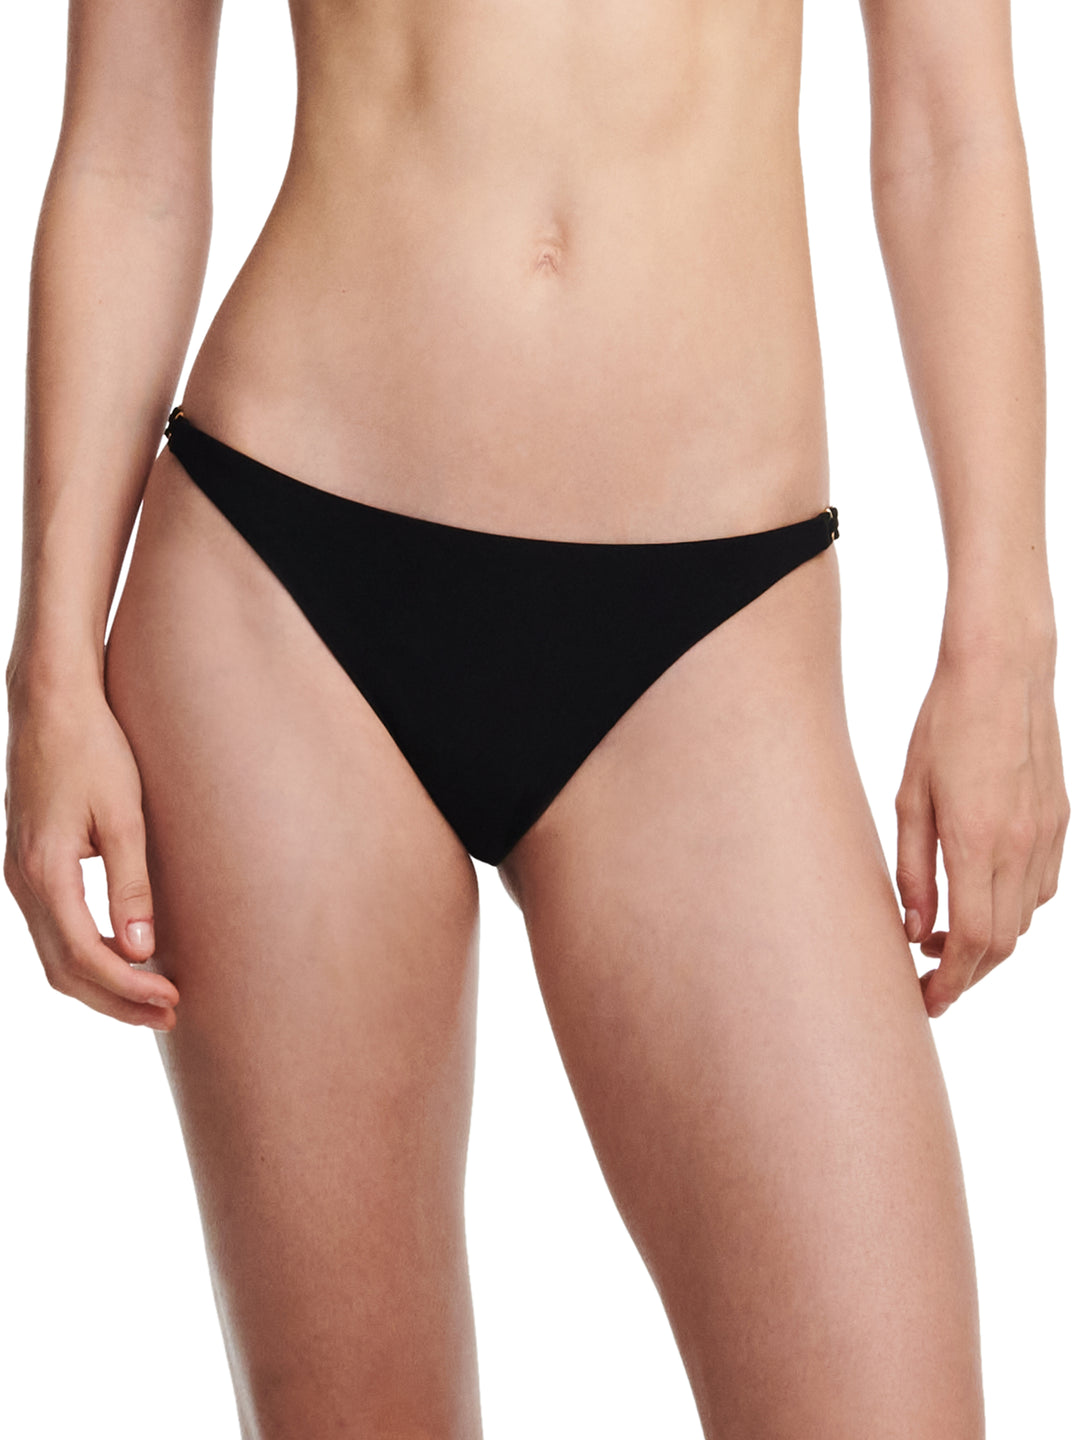 Chantelle Swimwear - Emblem Bikini Black